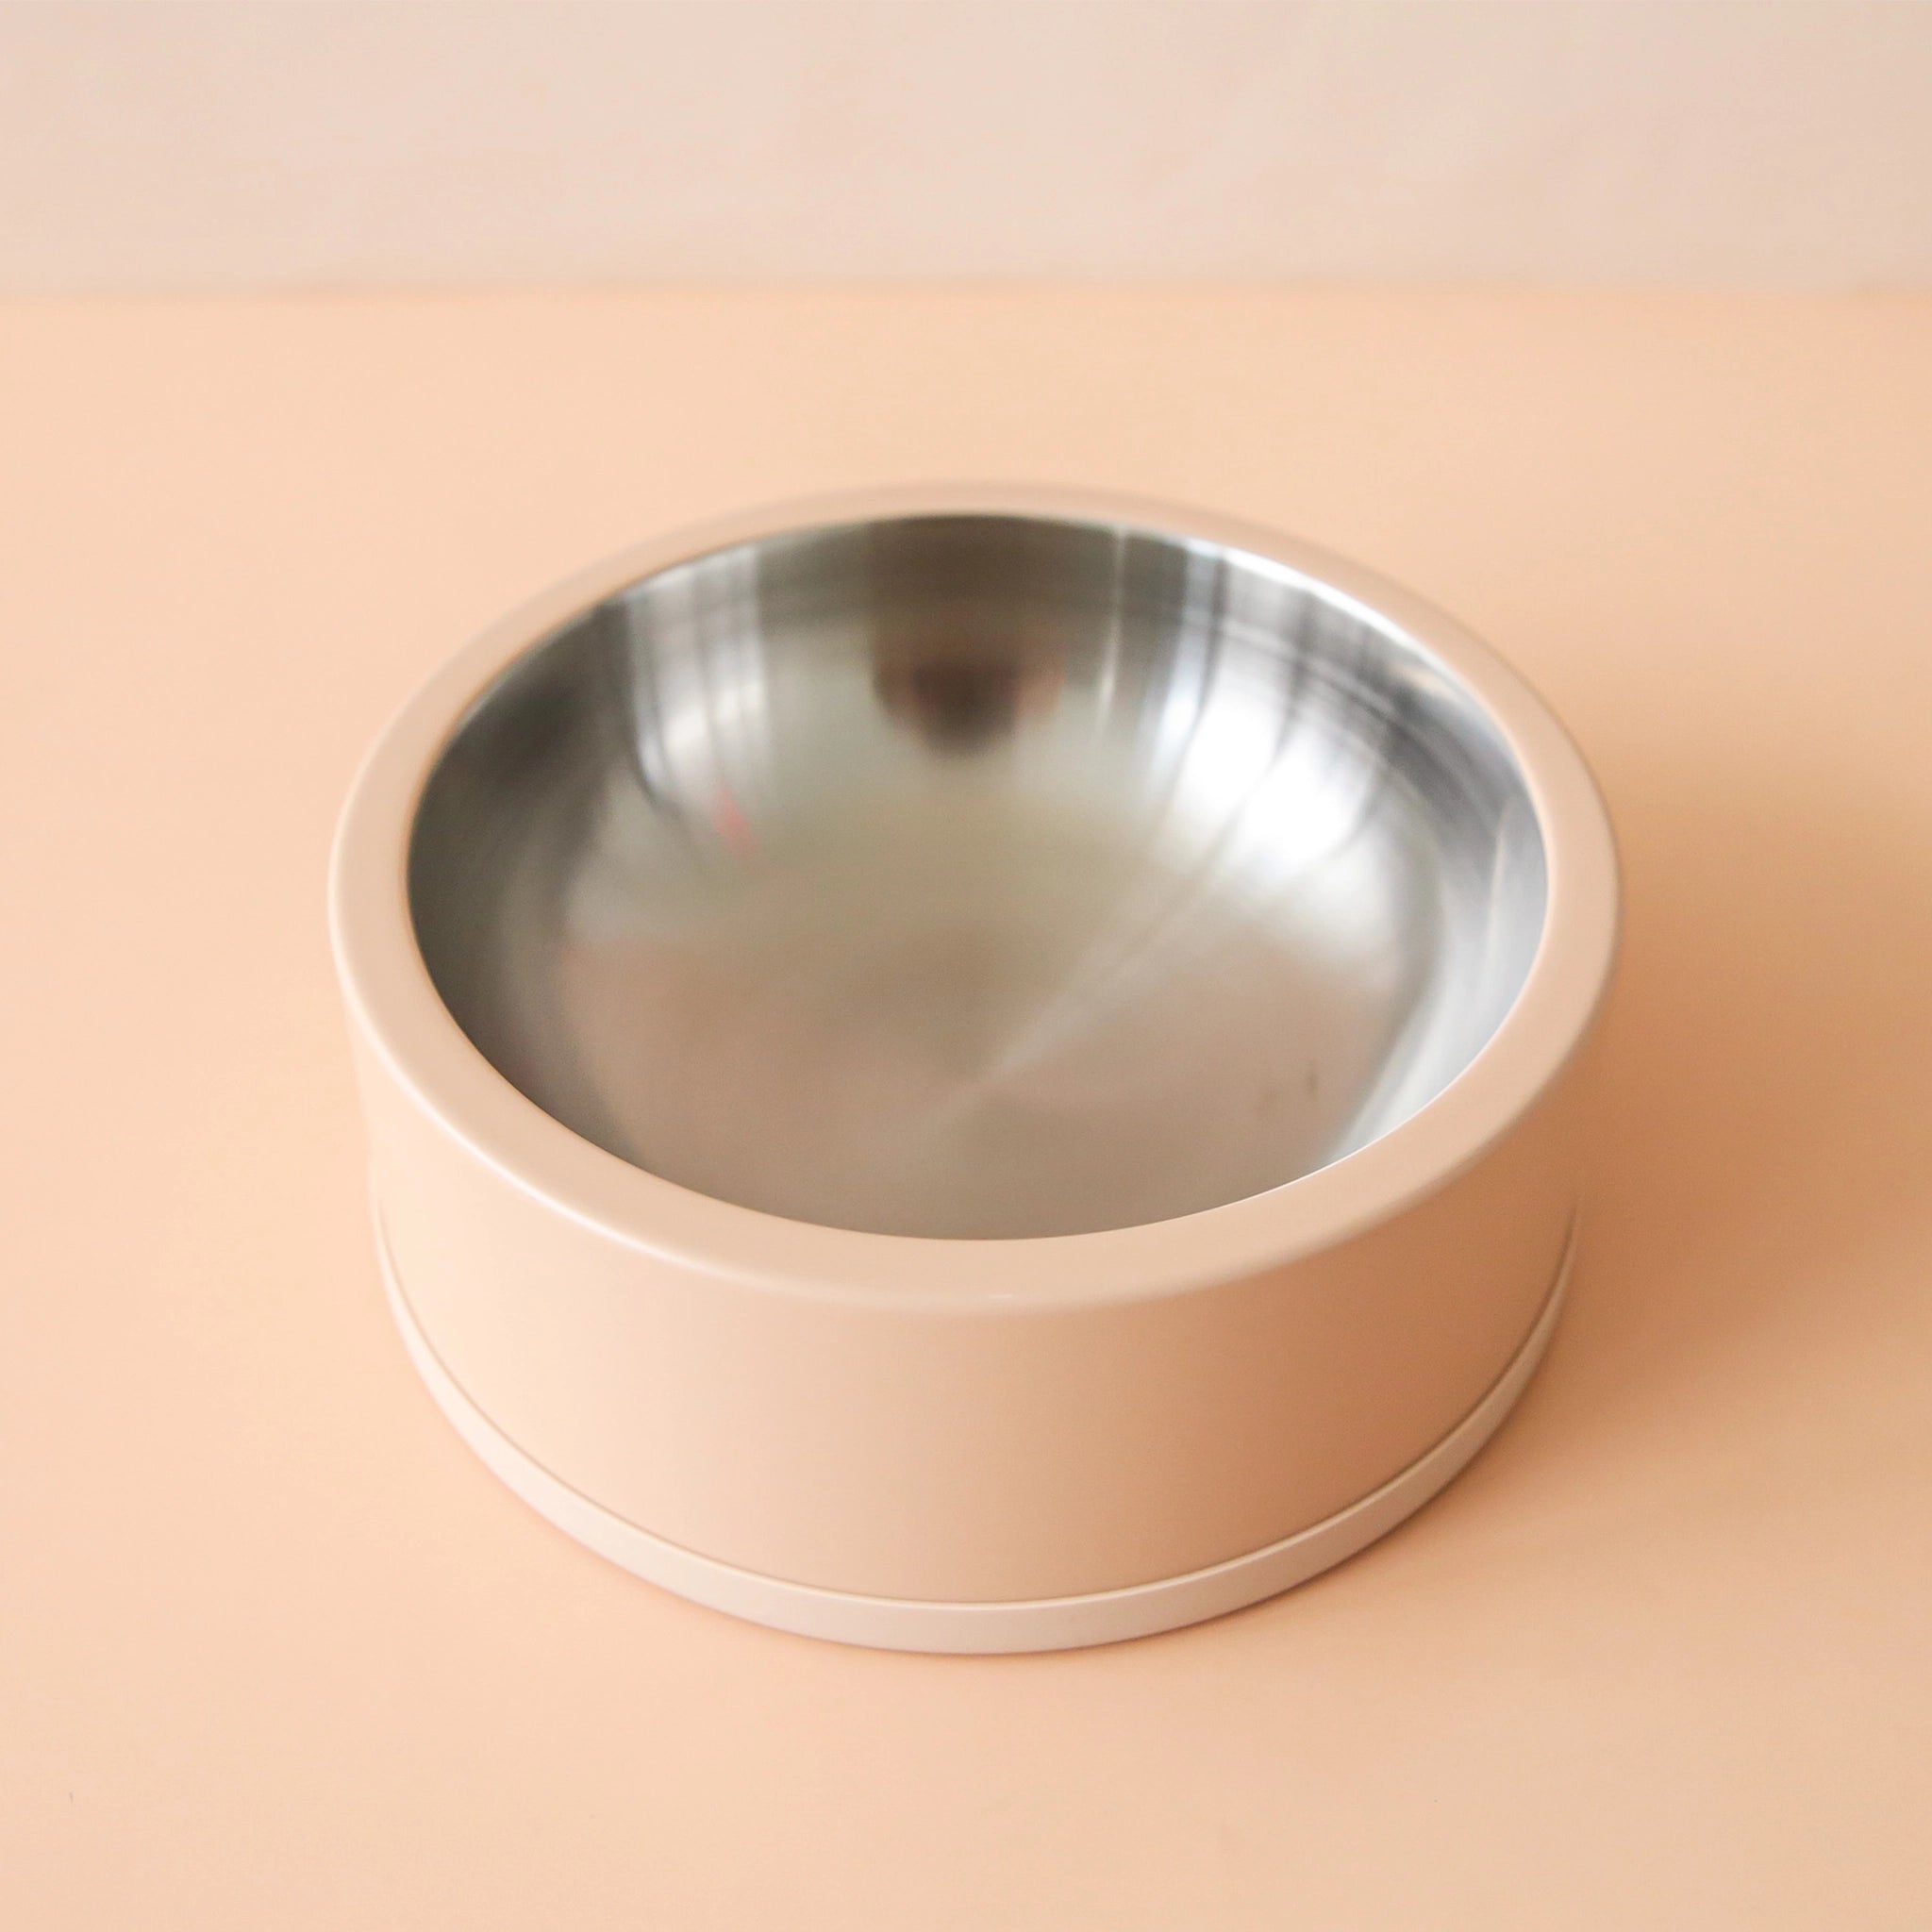 Small Dog Bowl